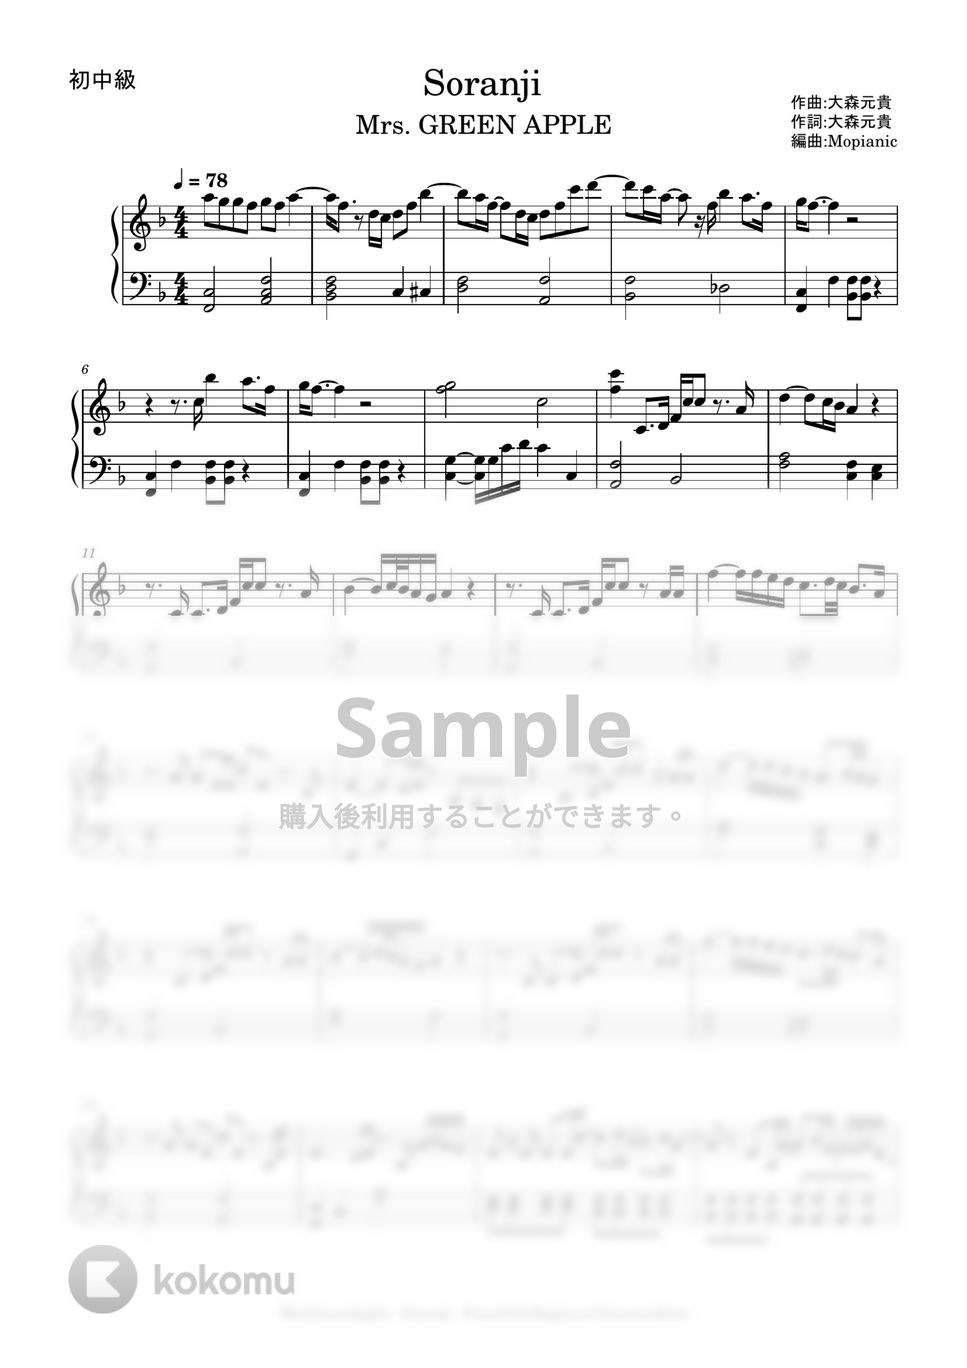 Mrs. GREEN APPLE - Soranji (beginner to intermediate, piano) by Mopianic